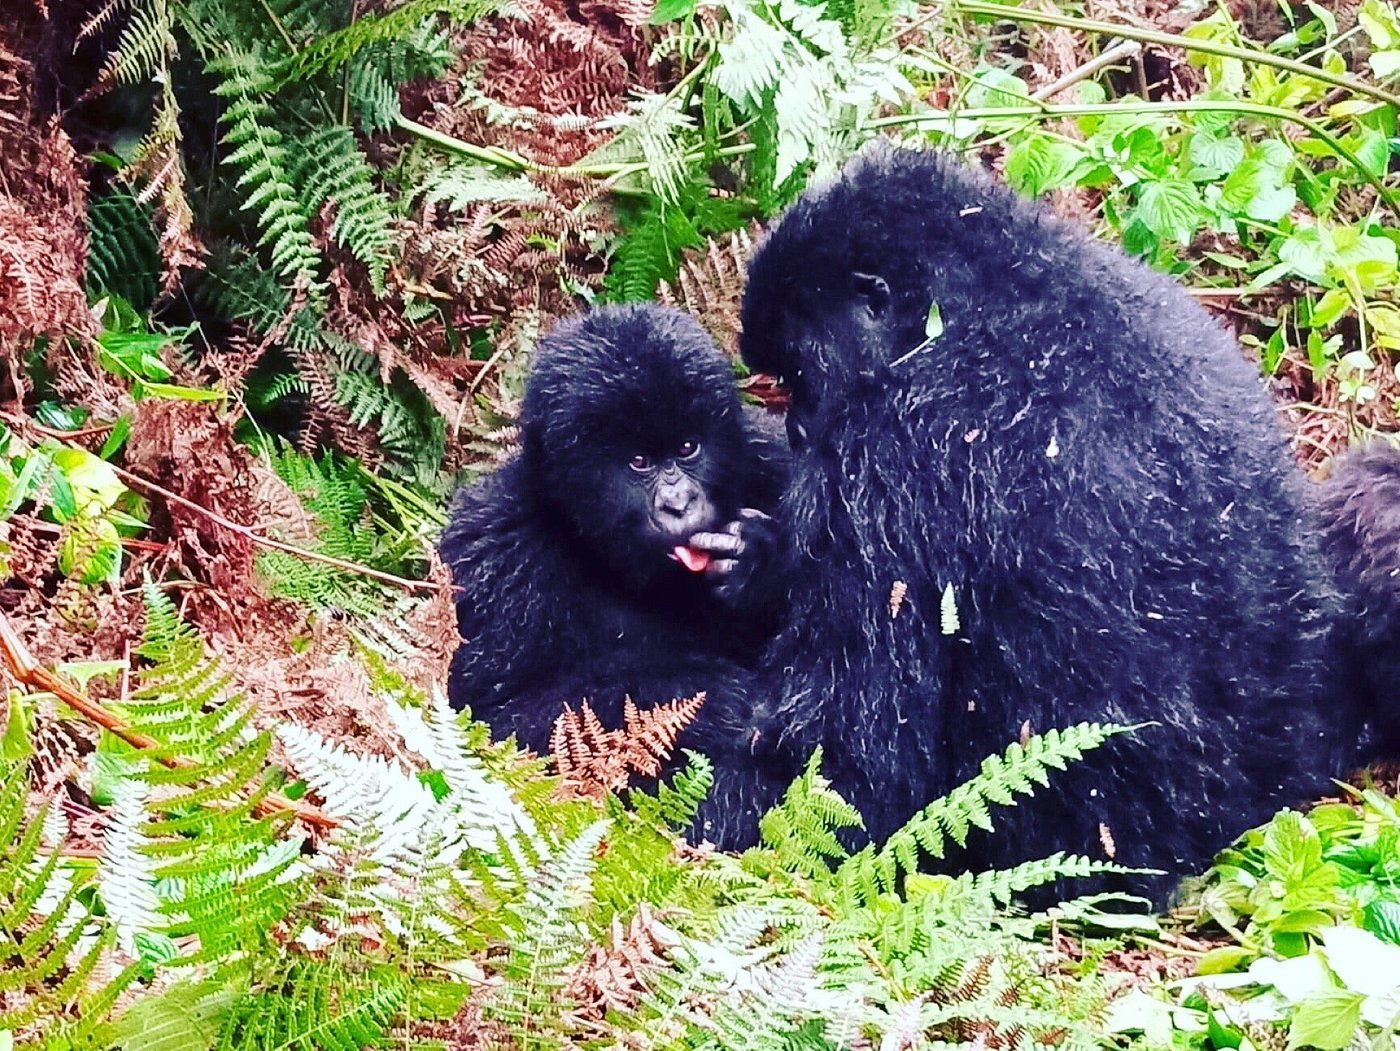 Trekking Gorillas in Mgahinga Gorilla National Park